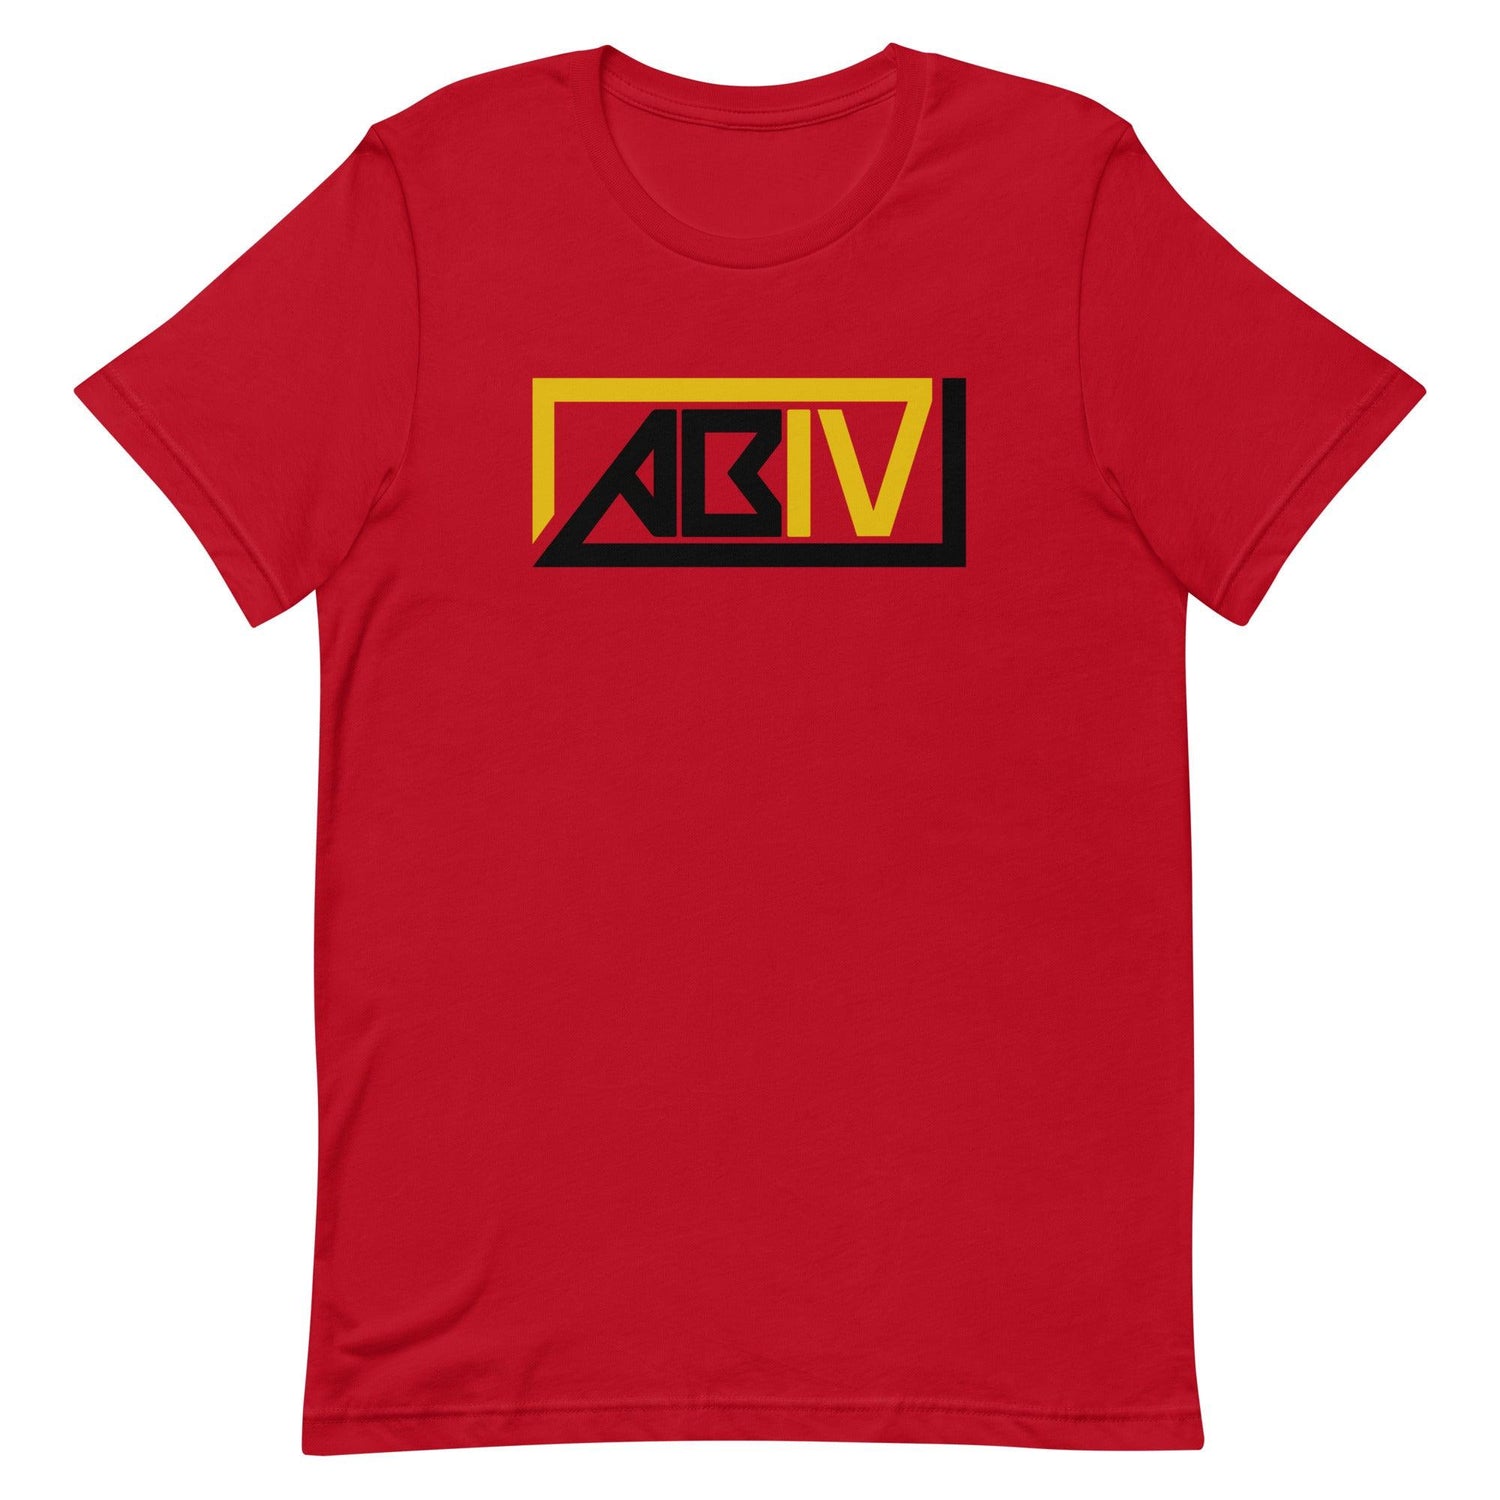 Arland Bruce IV "ABIV" t-shirt - Fan Arch